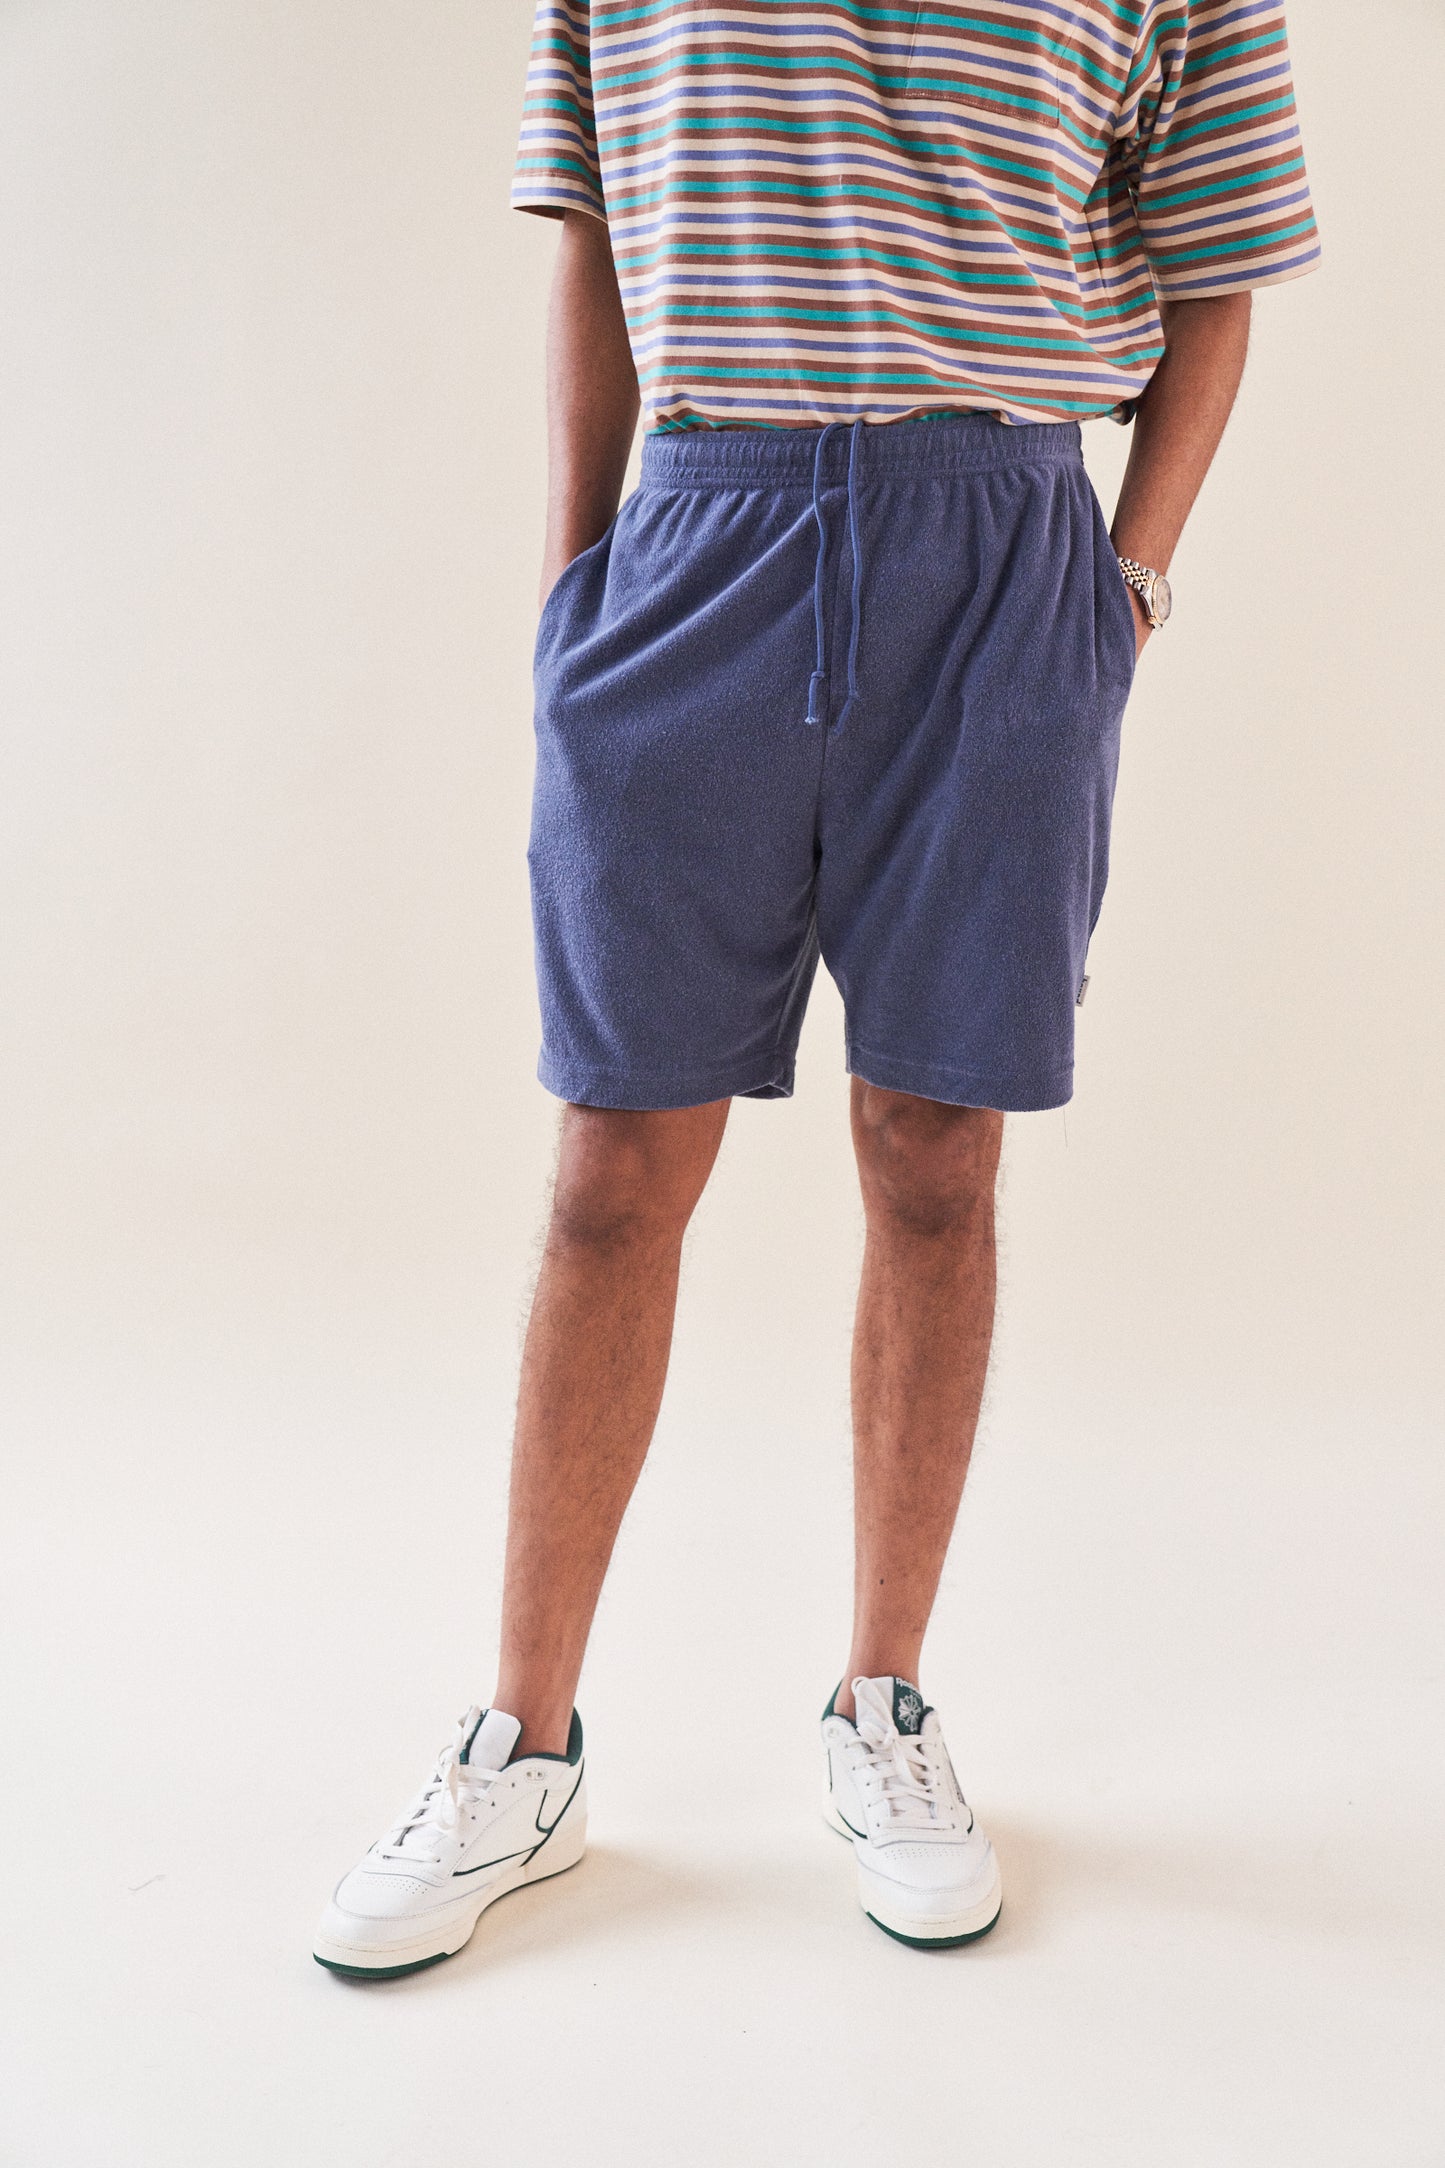 bound 'Ocean' Terry Towel Shorts